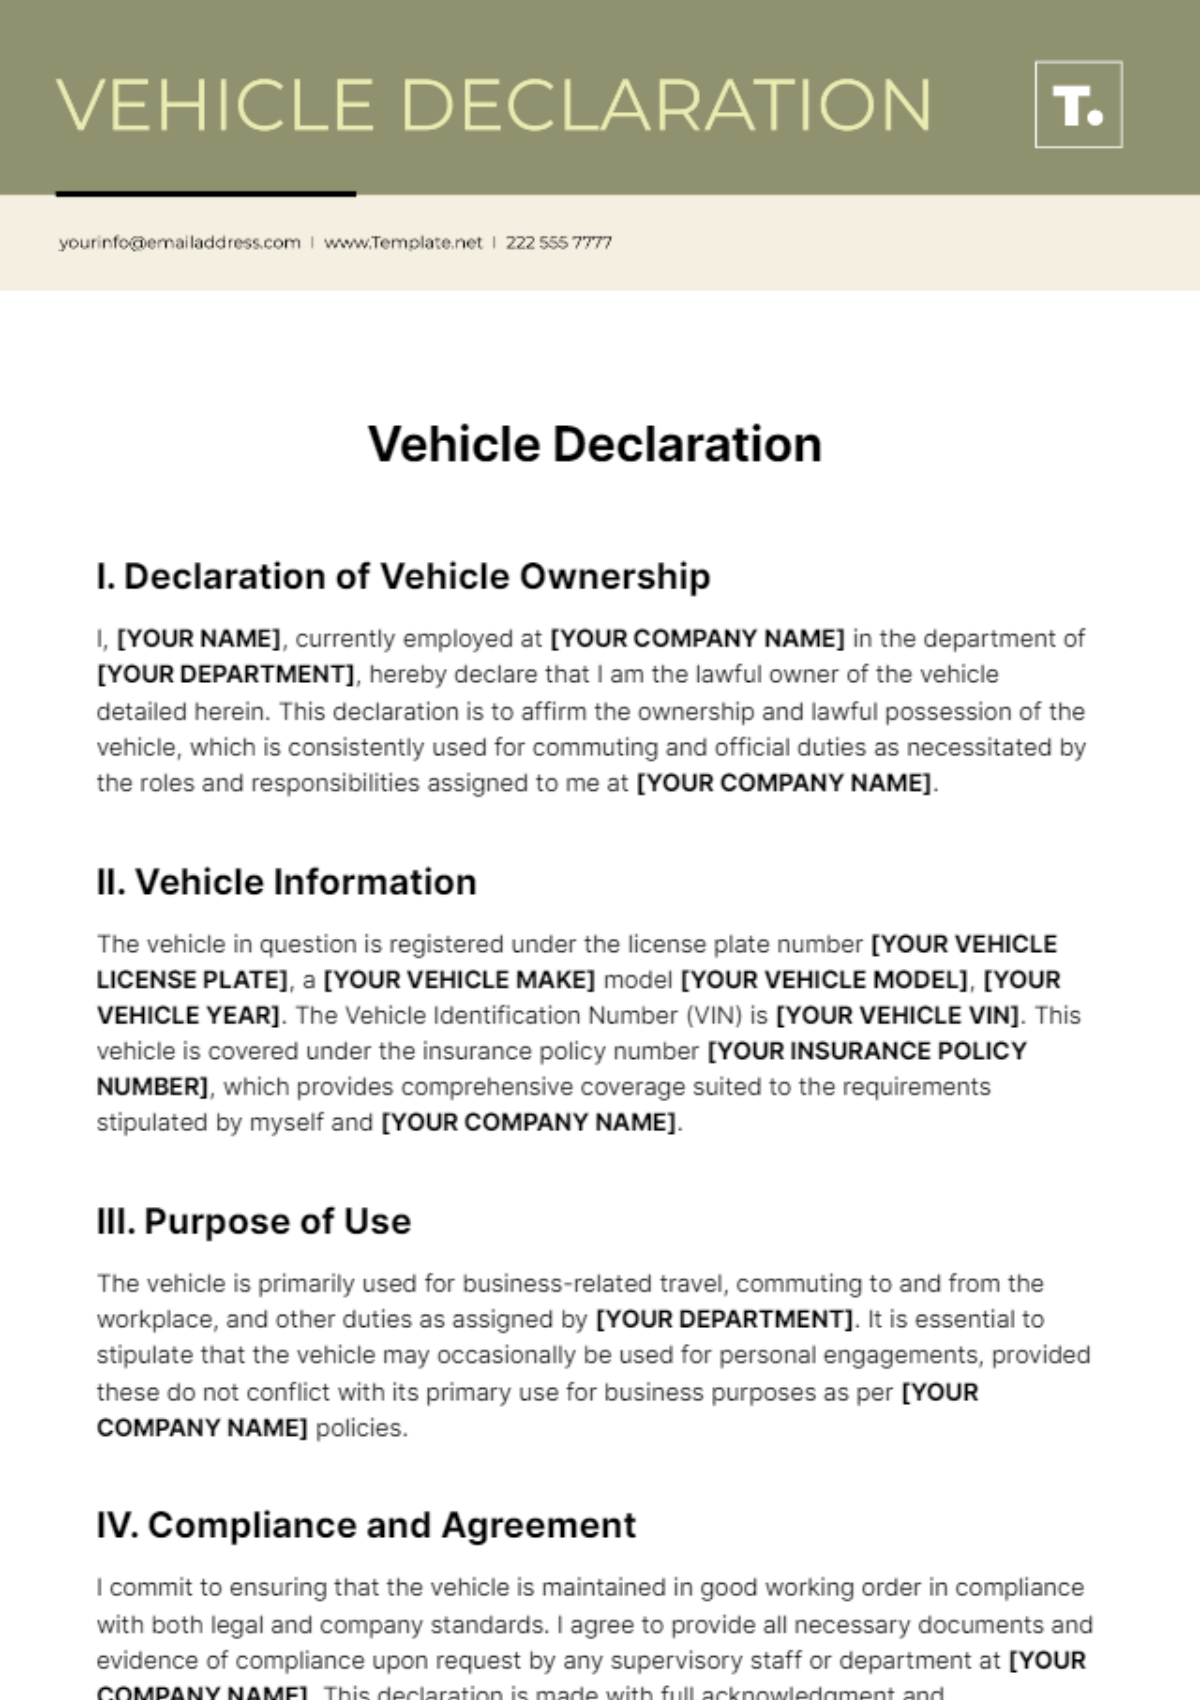 Vehicle Declaration Template